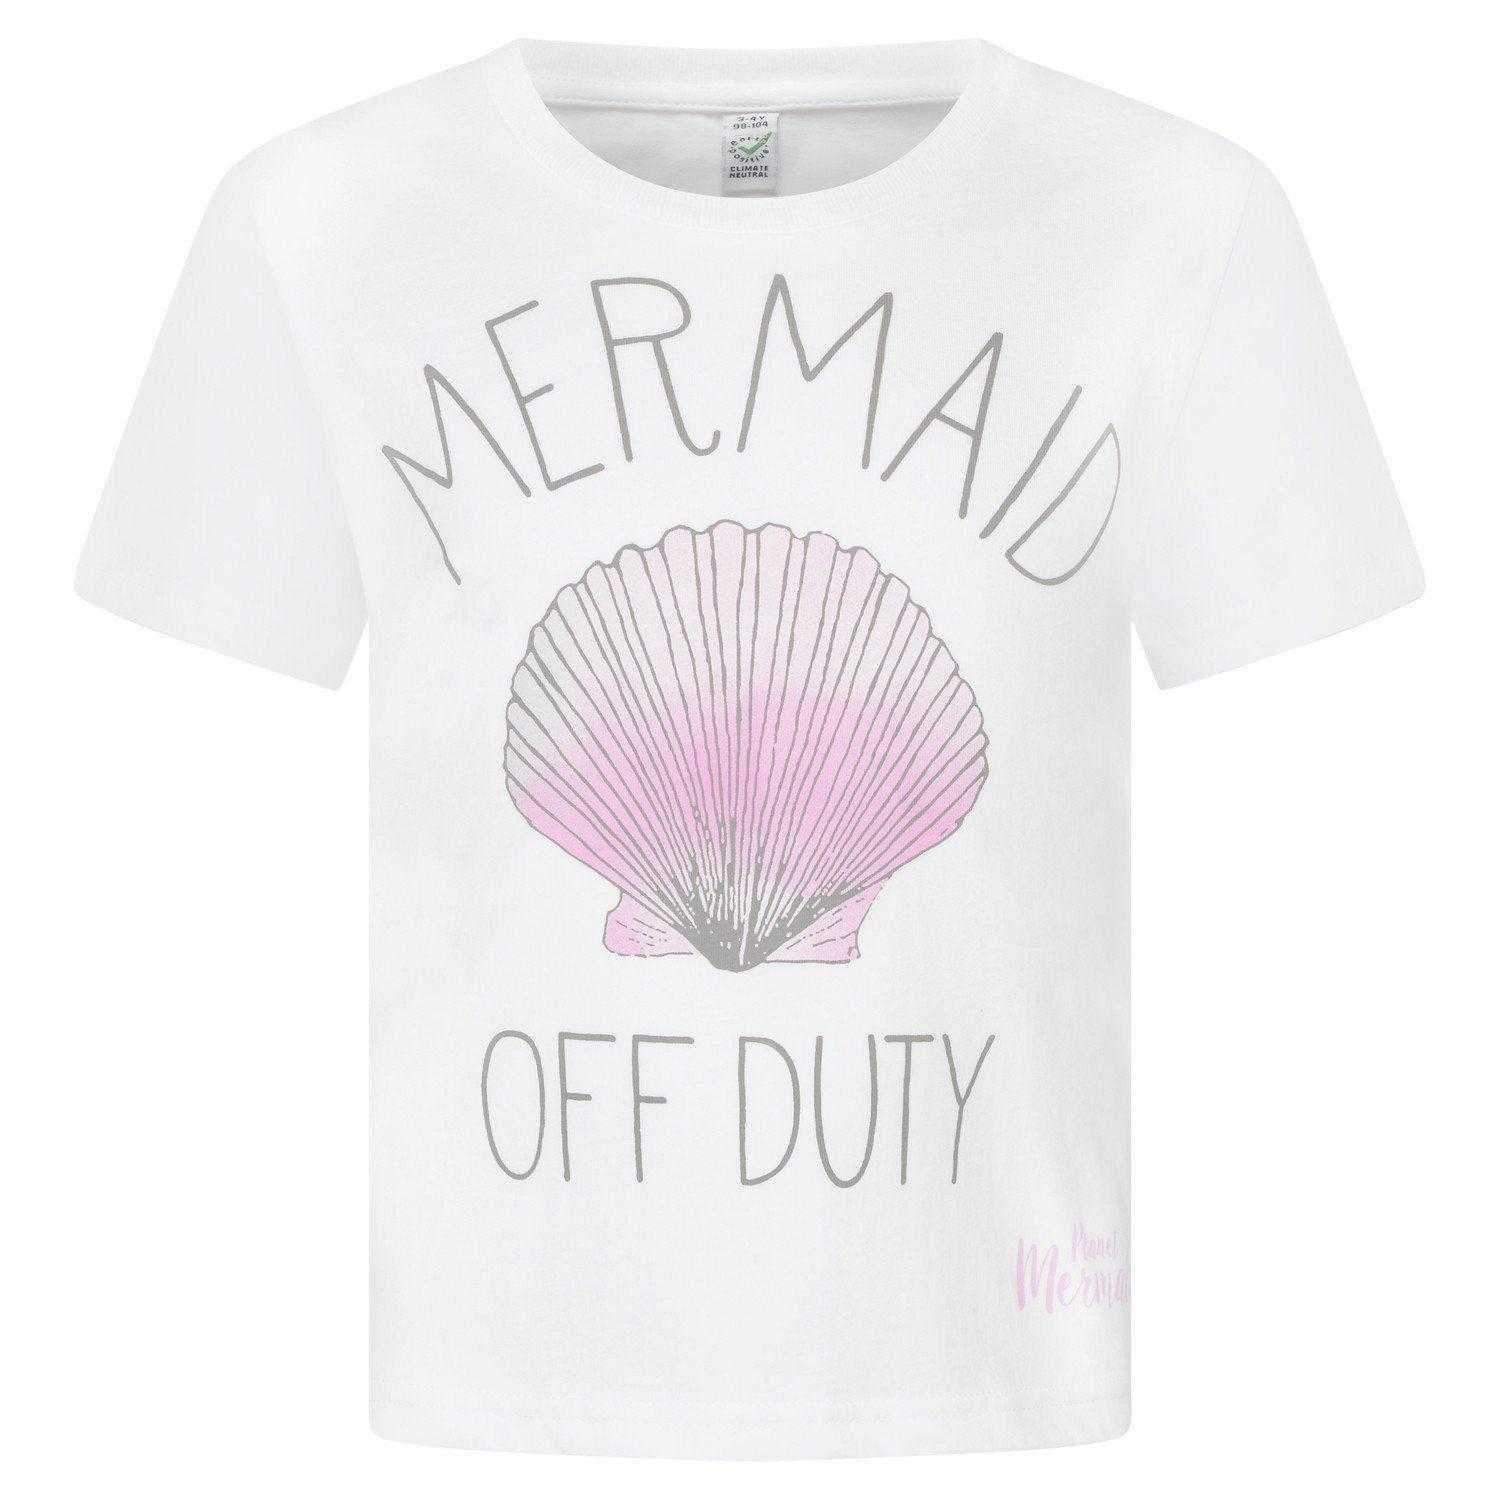 Mermaid Off Duty T-shirt - Mermaids Tail UK